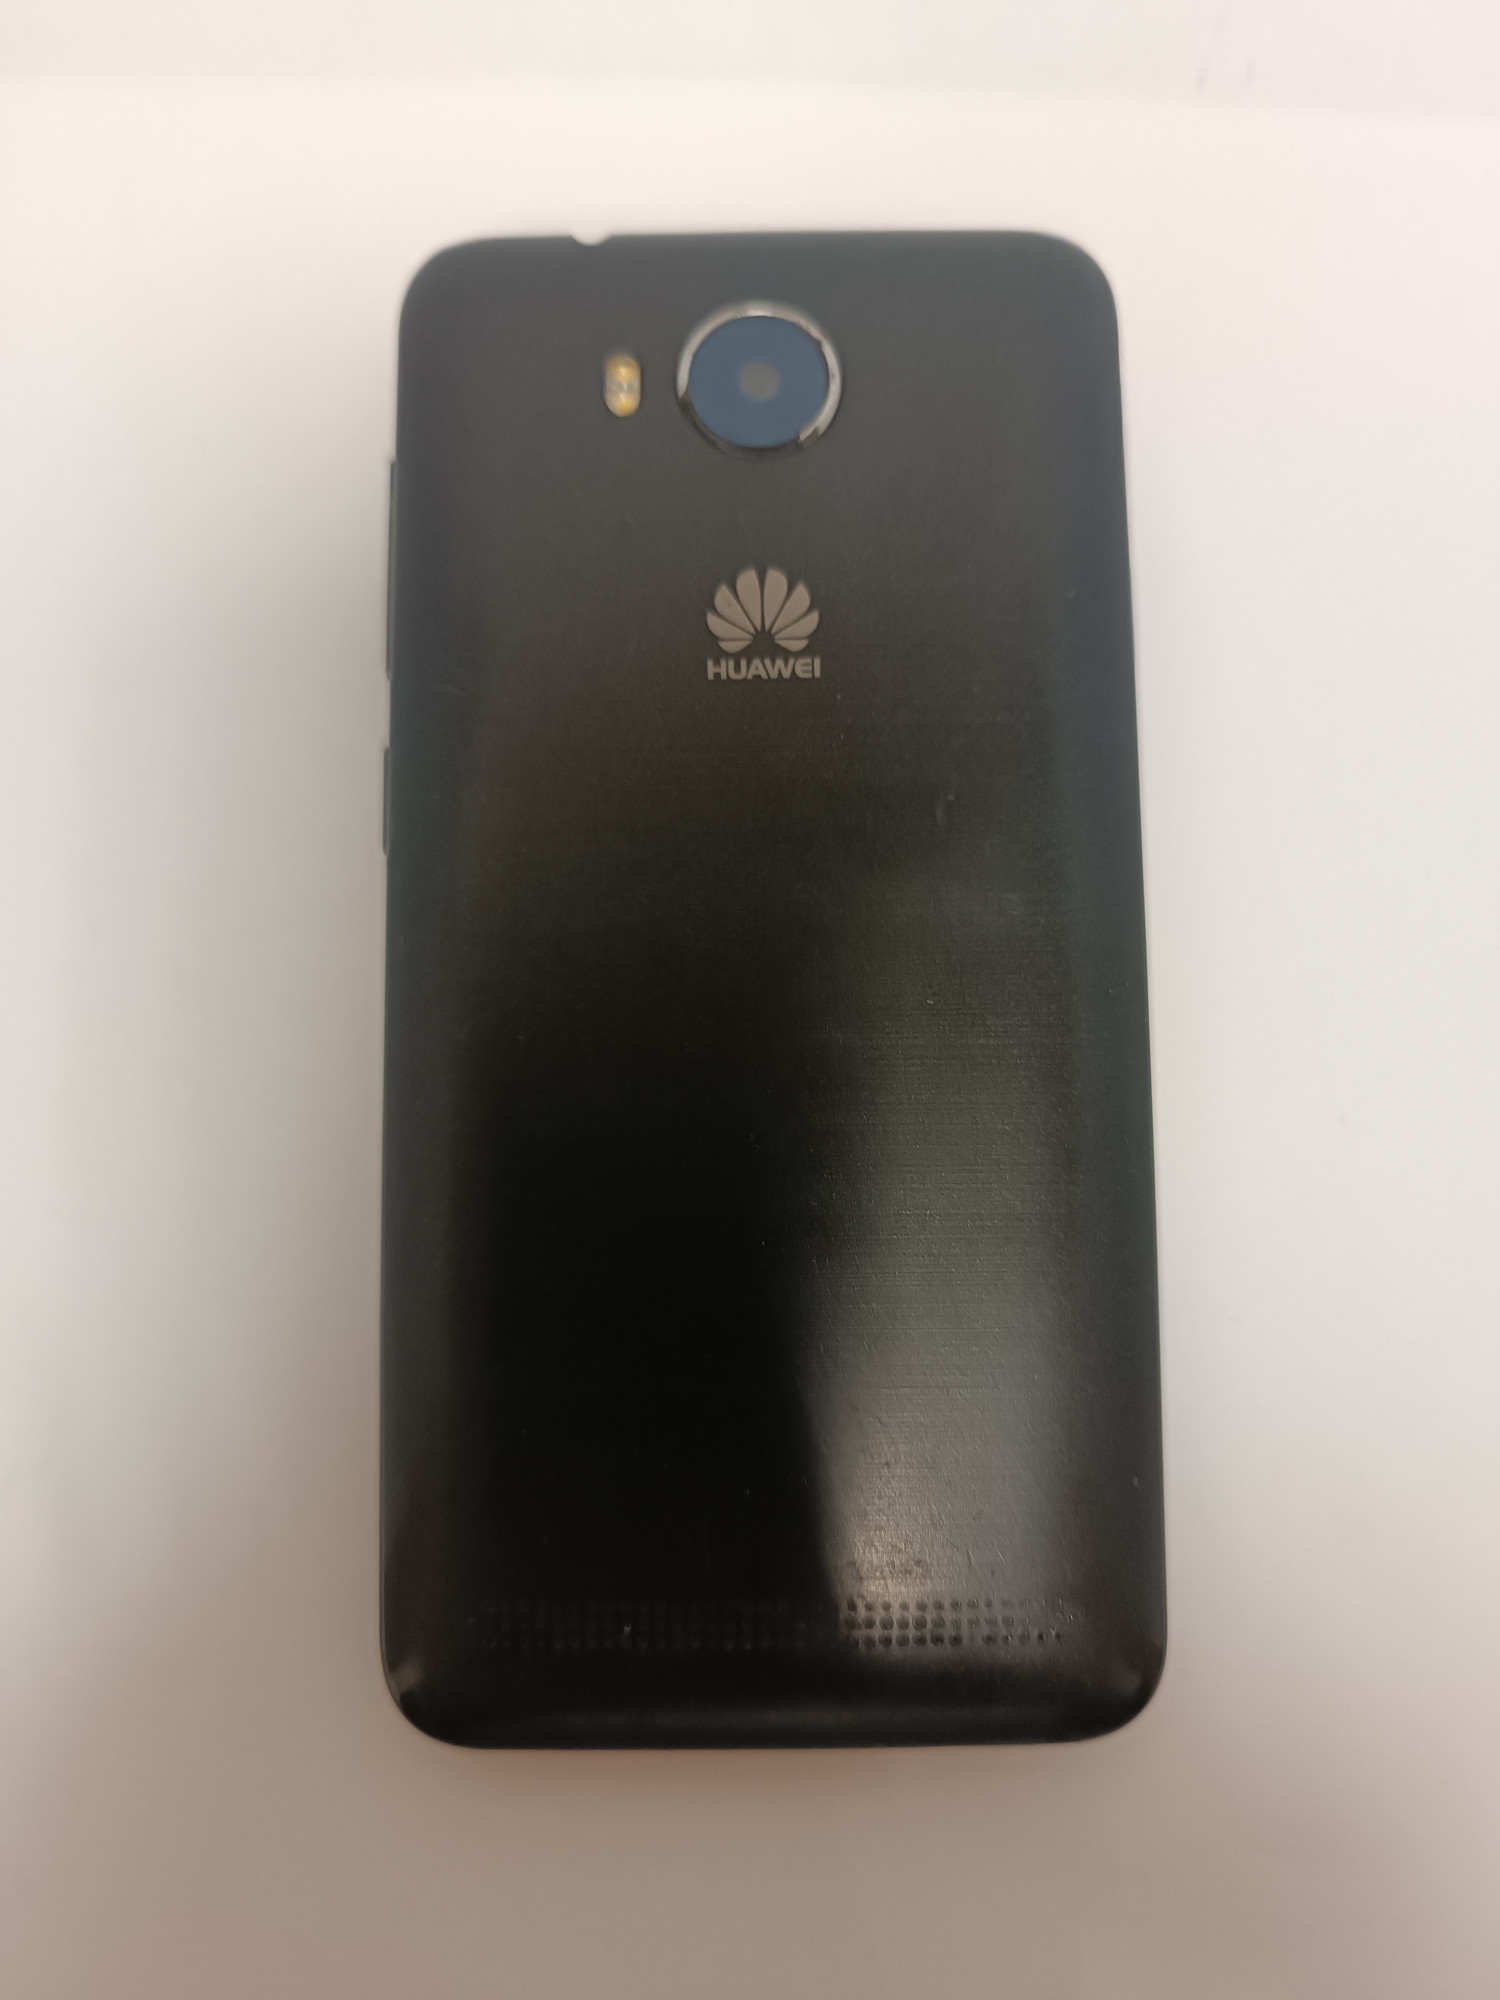 Huawei Y3 II 1/8Gb (LUA-U22) 2